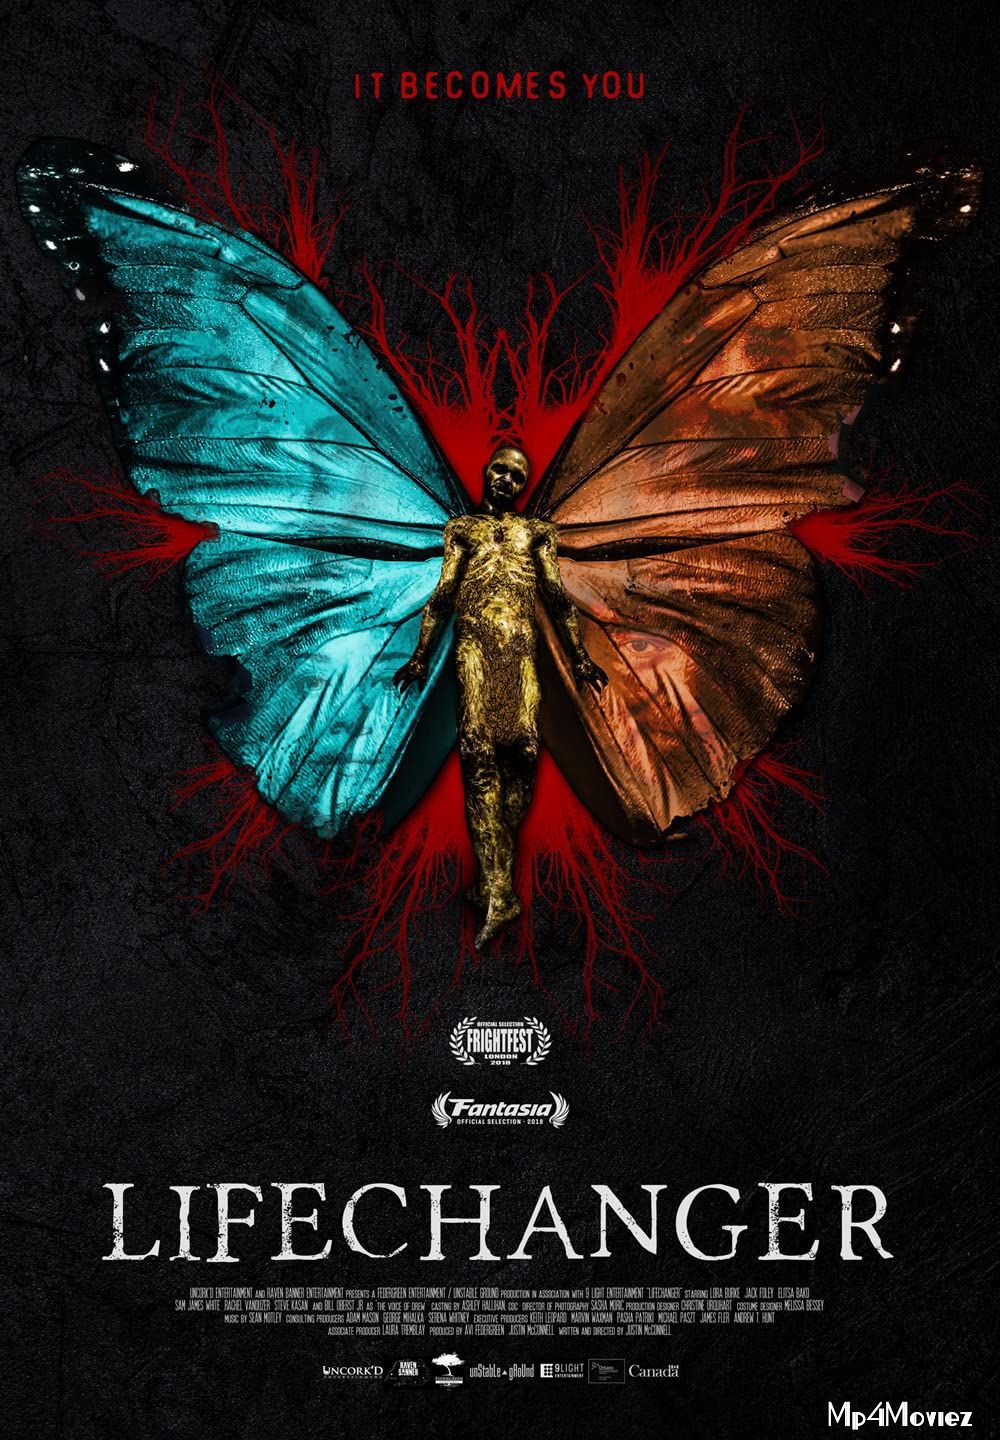 Lifechanger (2018) Hindi Dubbed BluRay download full movie